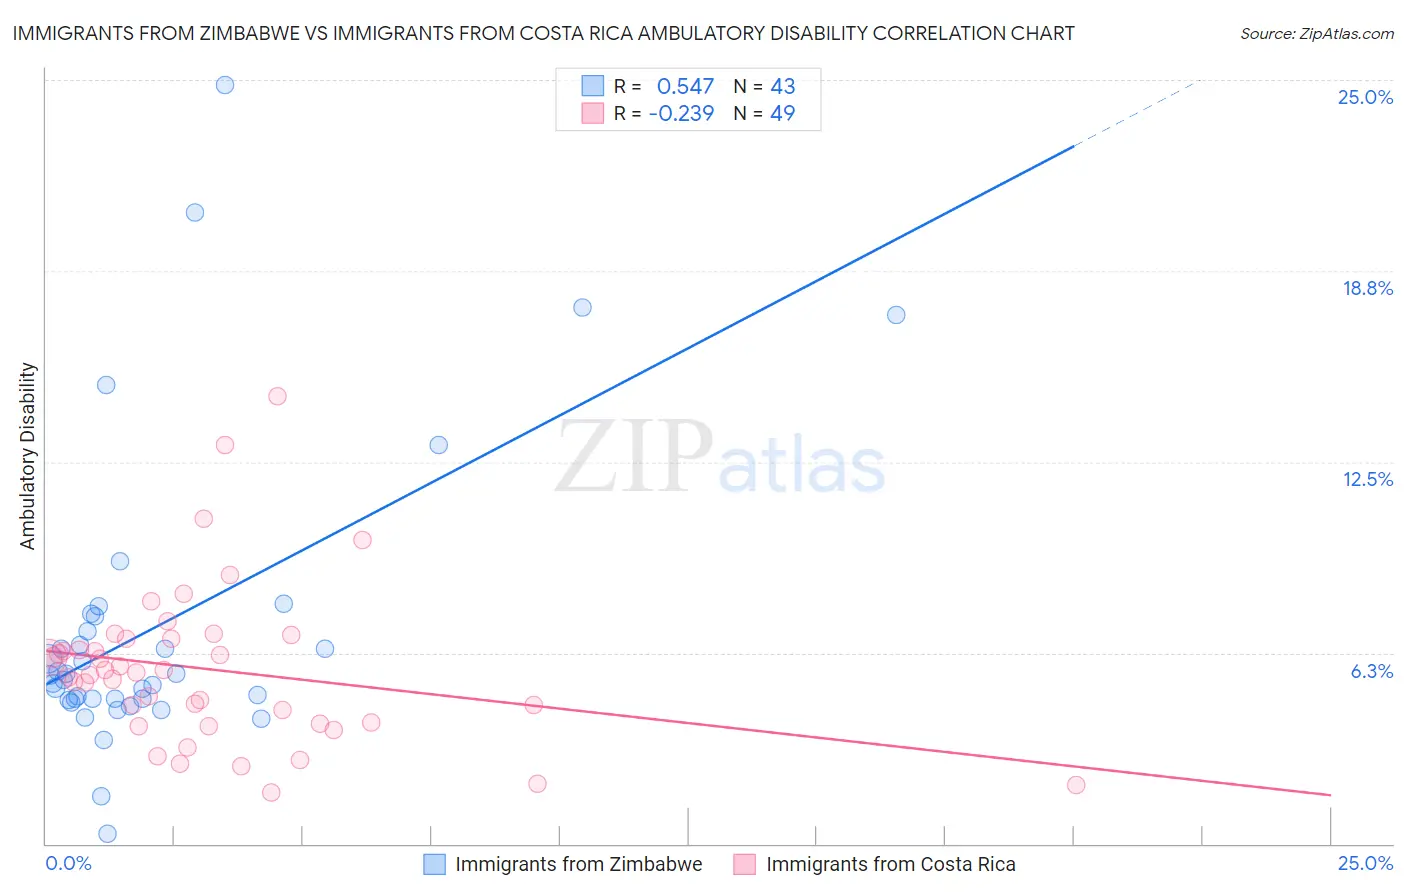 Immigrants from Zimbabwe vs Immigrants from Costa Rica Ambulatory Disability